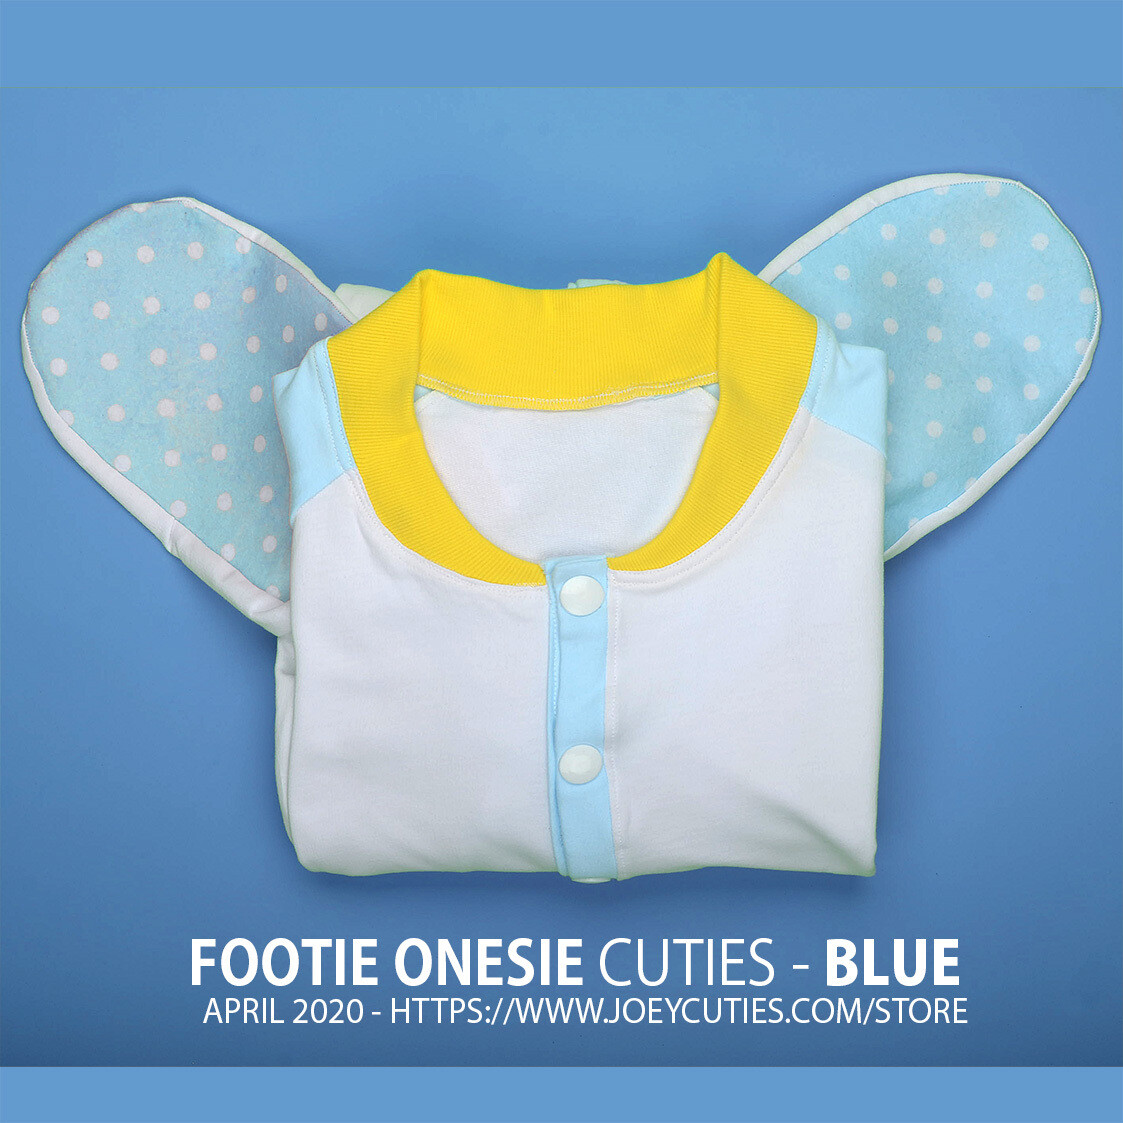 Footie Onesie Cuties - Blue (April 2020 Edition)